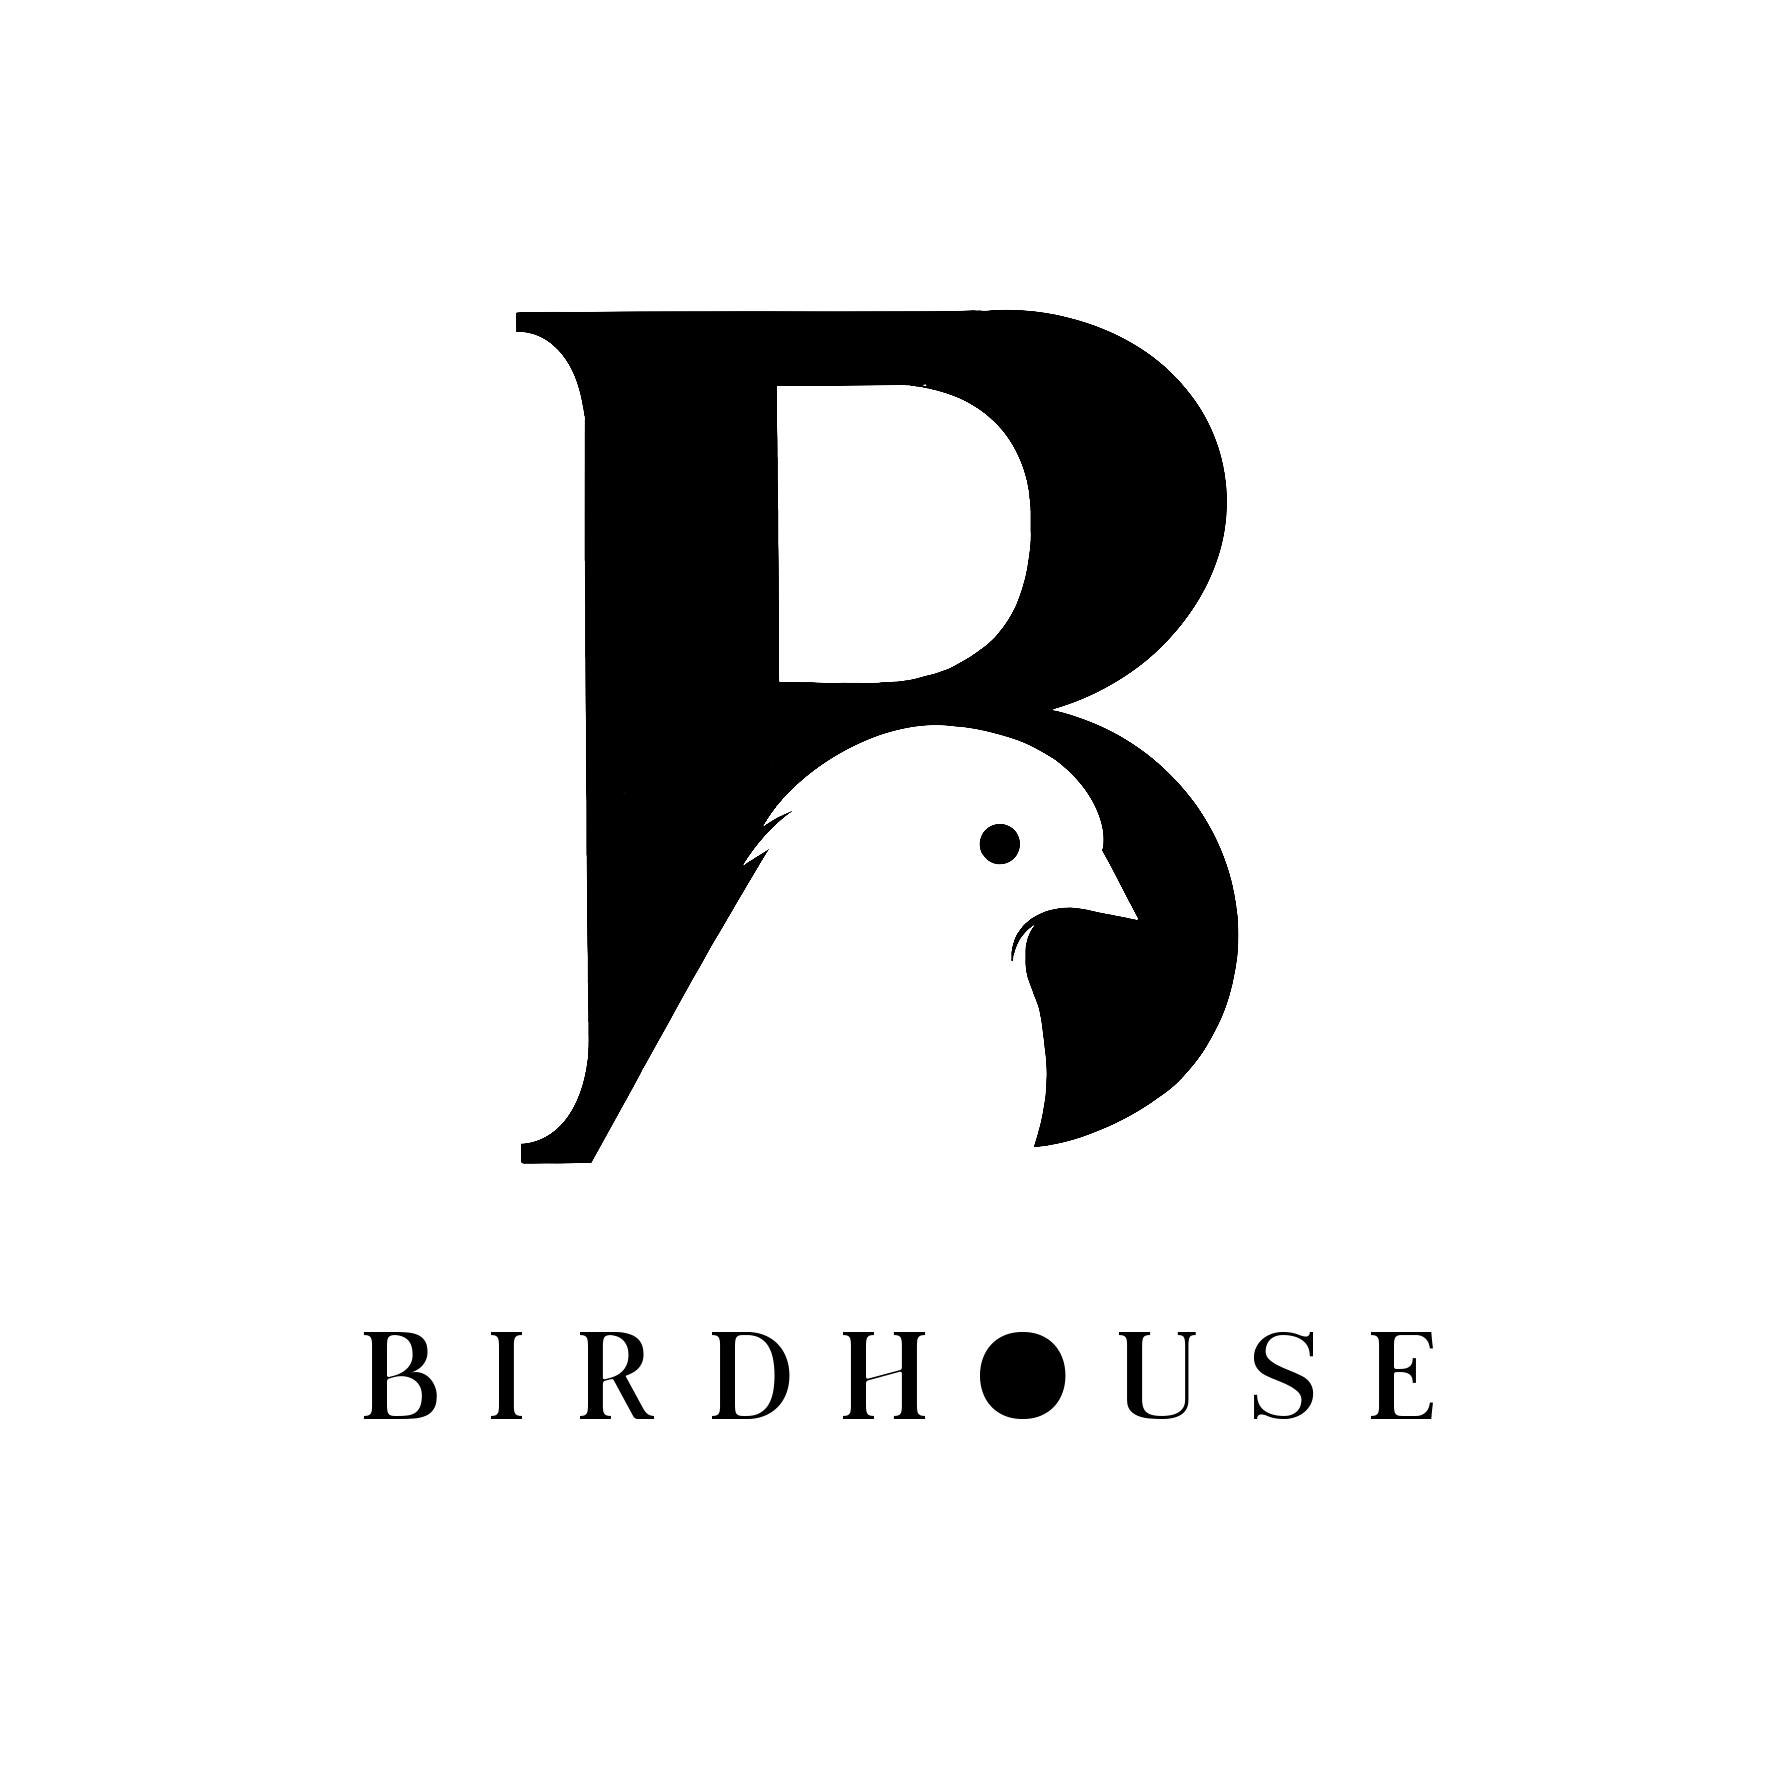 Birdhouse Media